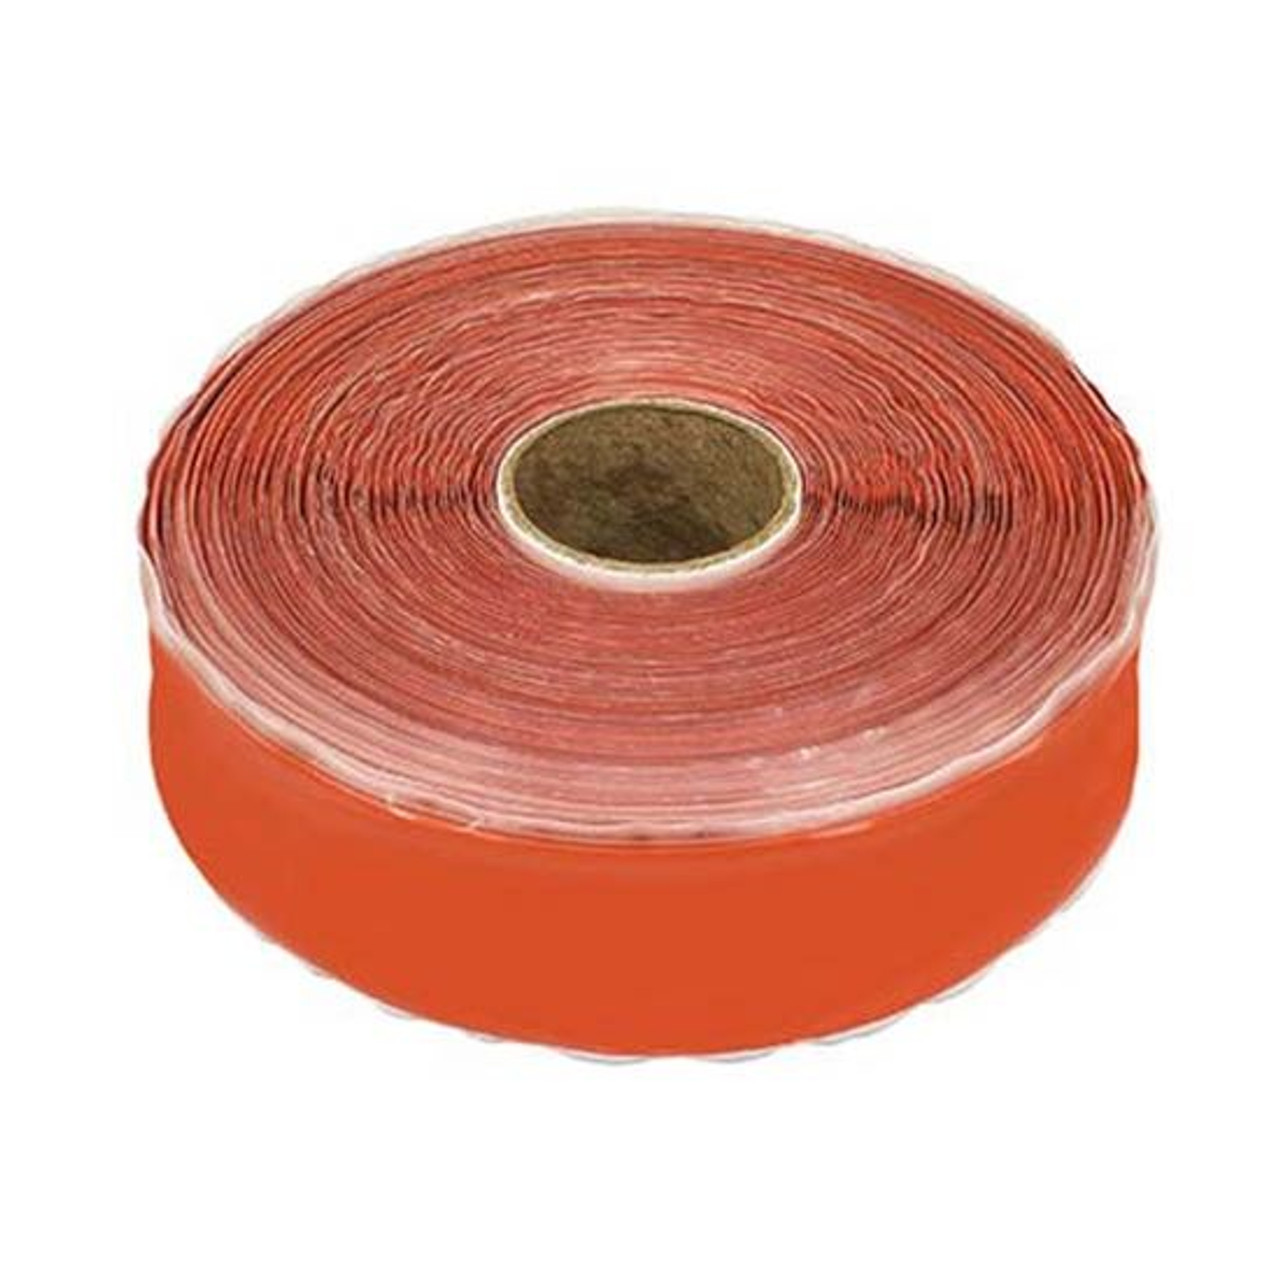 MoCap Silicone Seal Tape X-Treme 1 Inch 36 FT Orange Rescue Tape Stretch Wrap Sealant